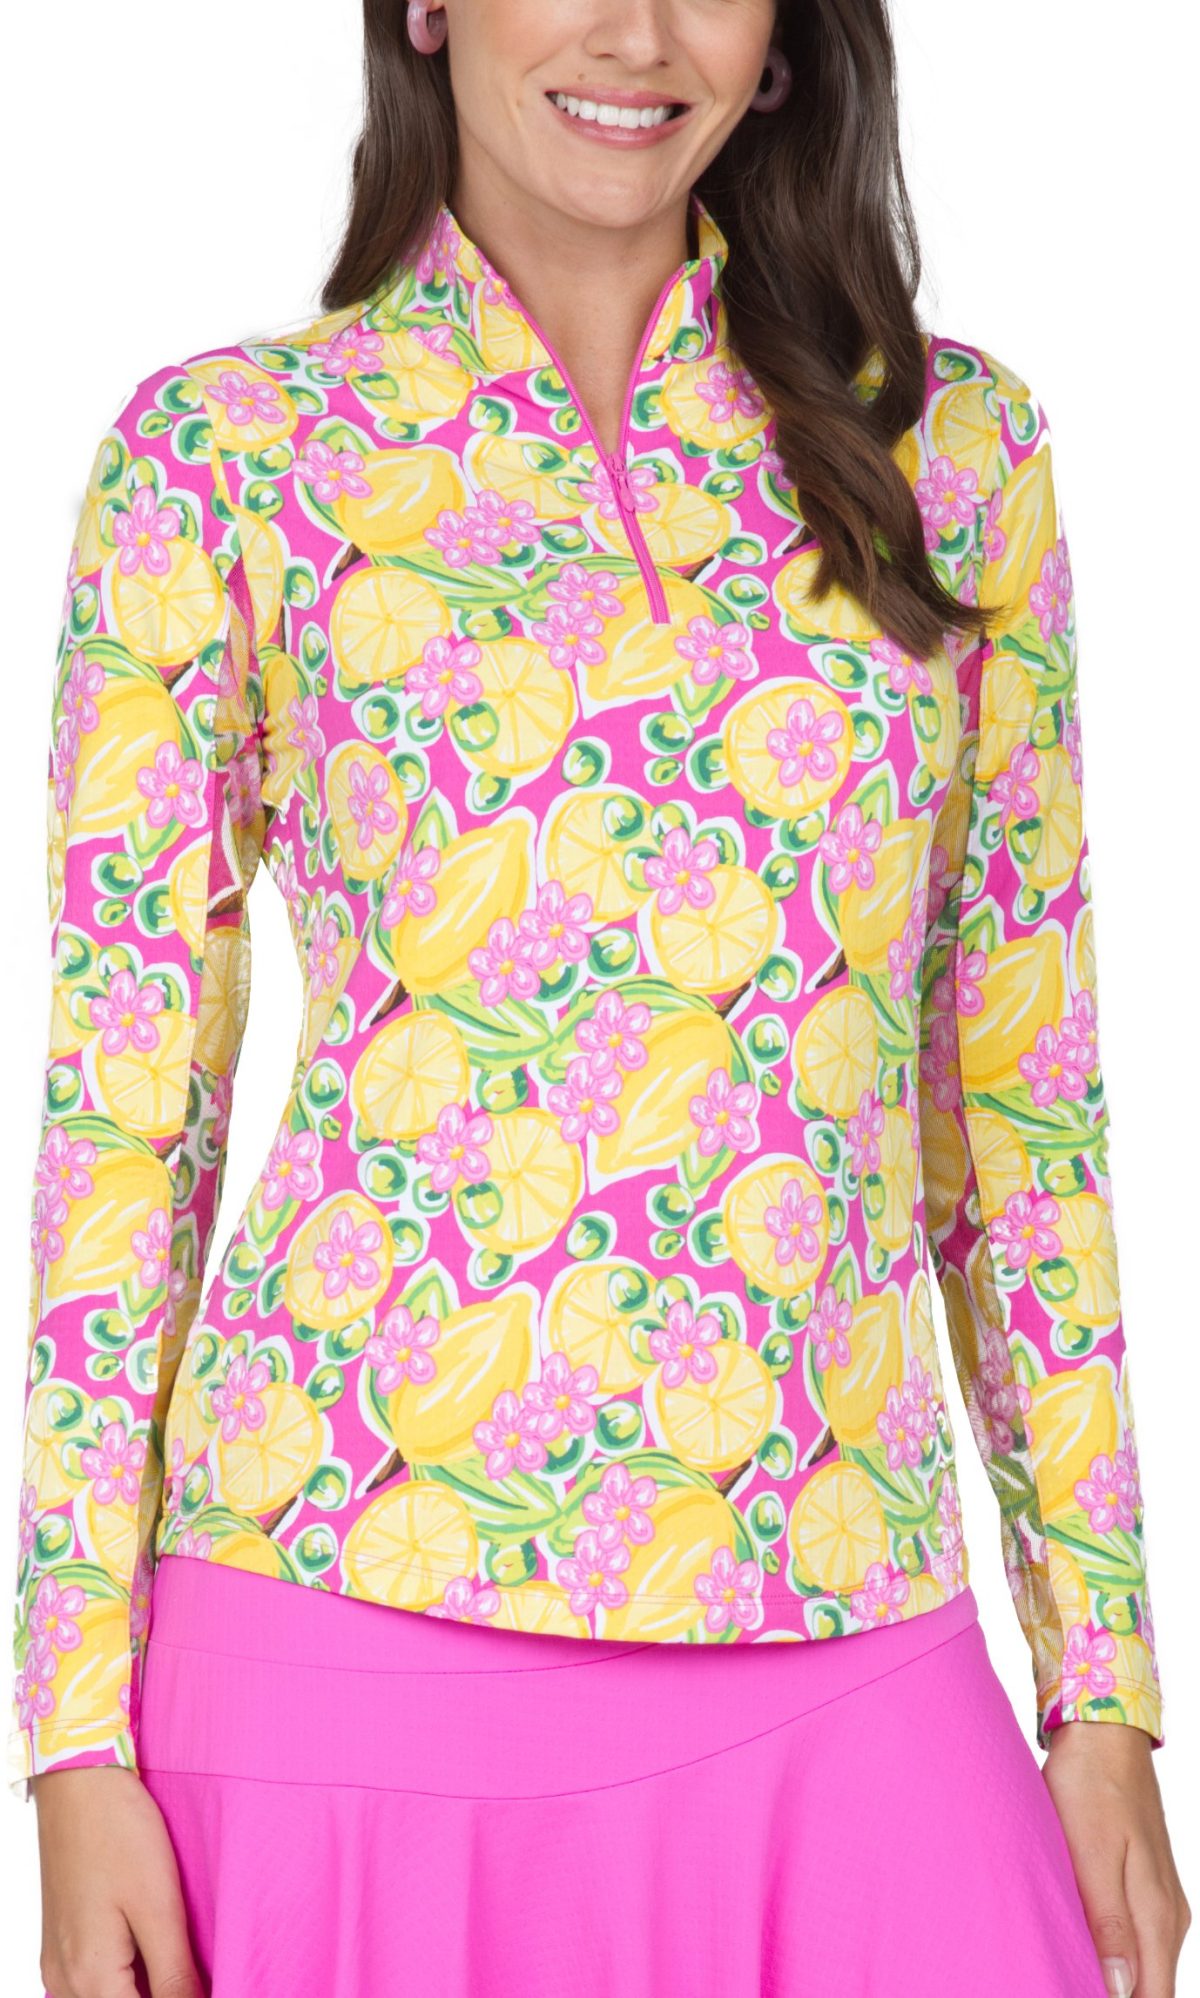 IBKUL Women's Calista Print Long Sleeve Mock Neck Golf Top, Nylon in Hot Pink/Multi, Size S